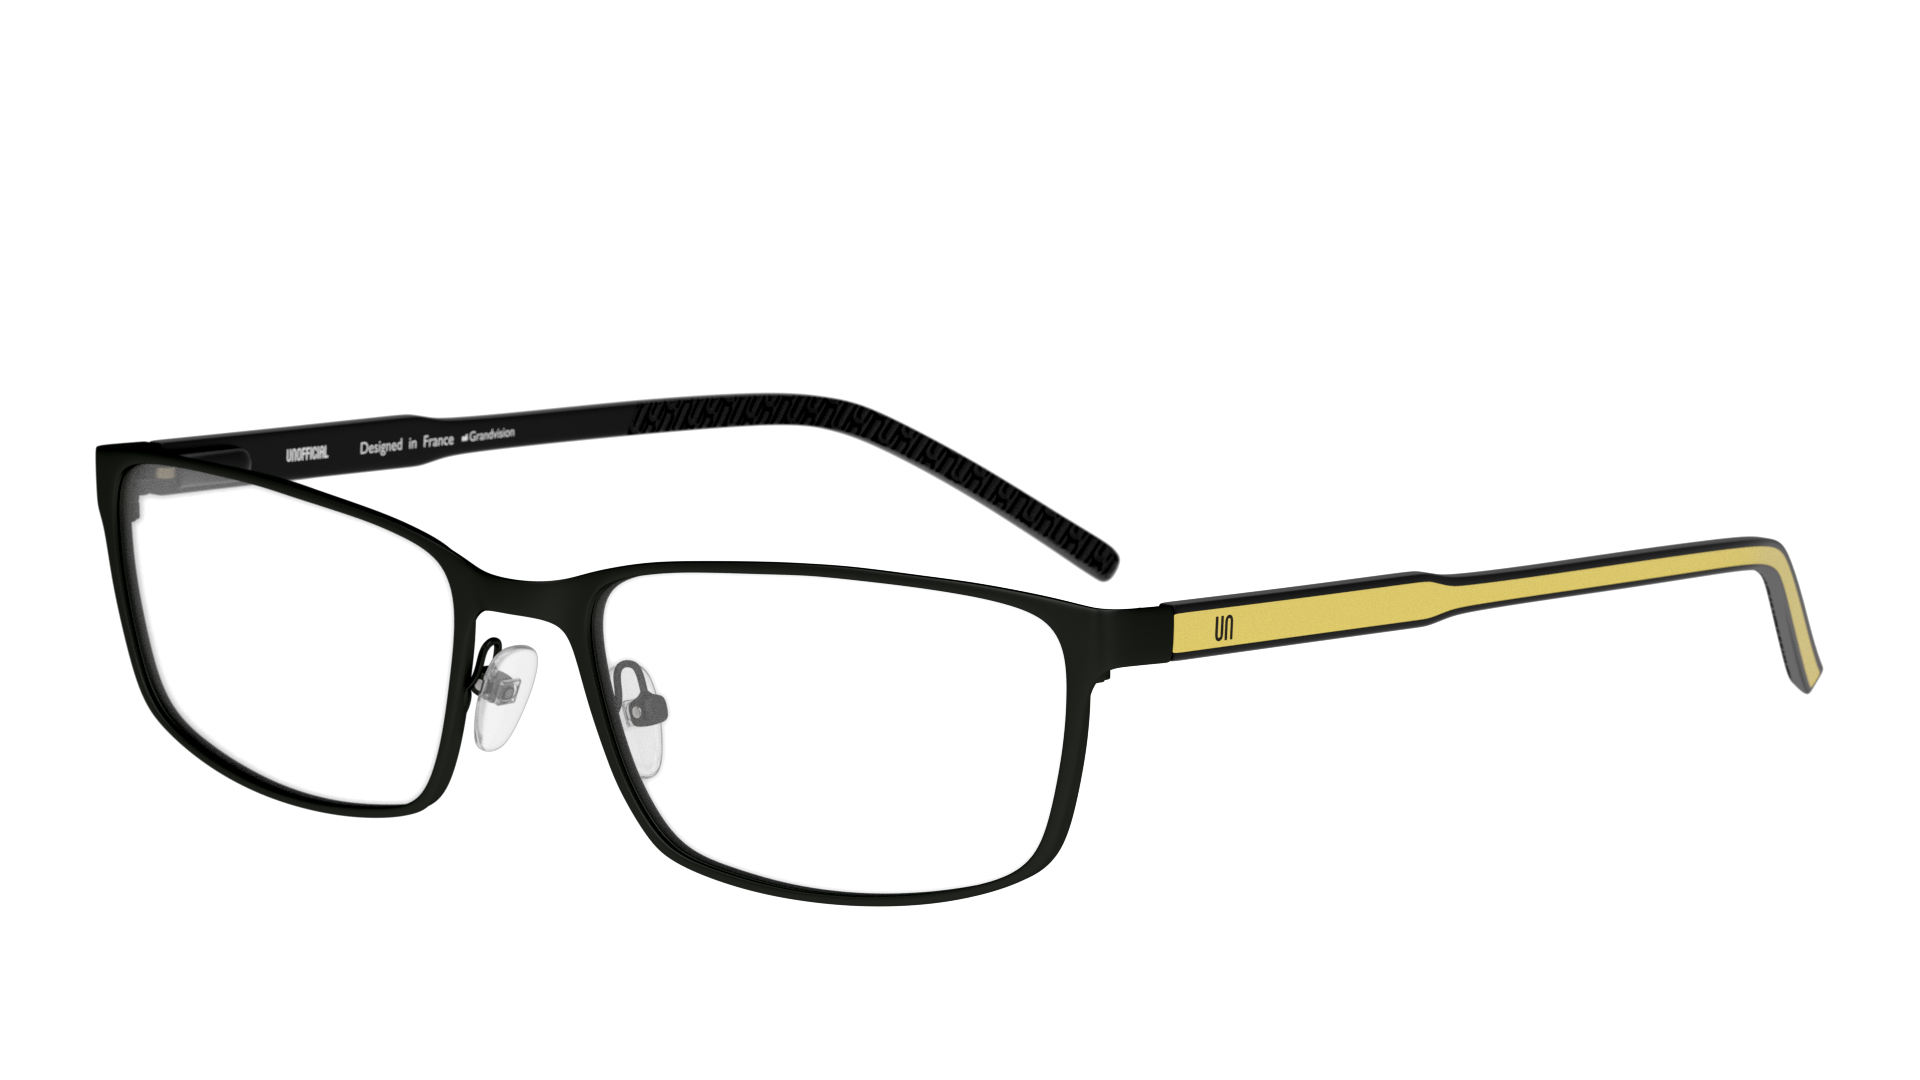 Angle_Left01 Unofficial UNOM0303 Glasses Transparent / Black